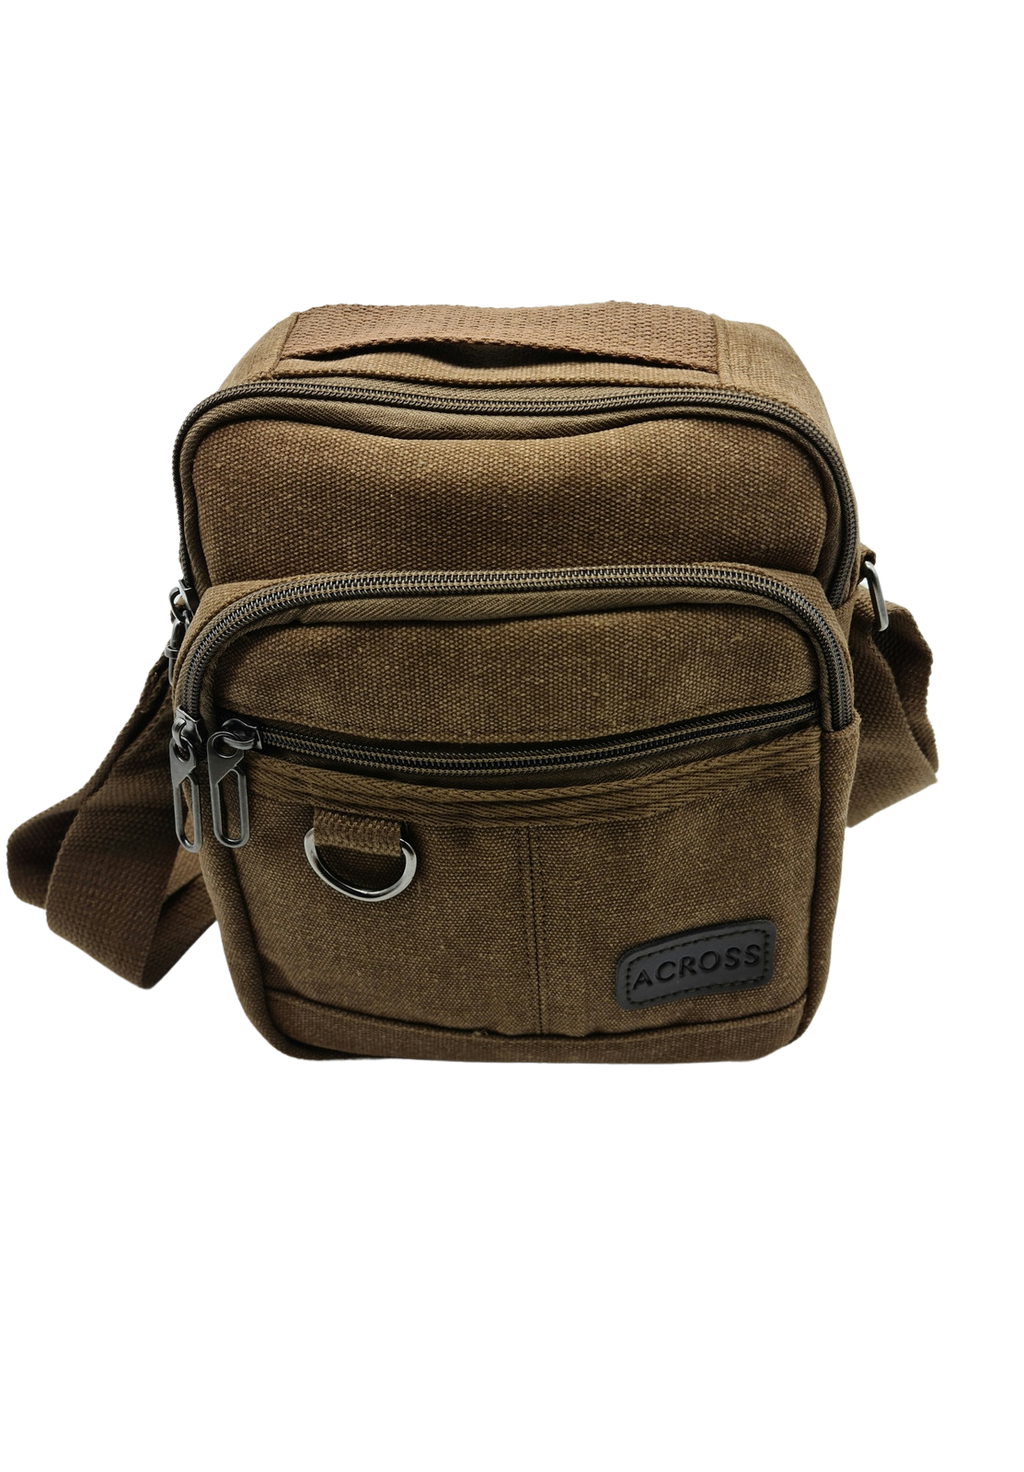 Across Design canvas brown shoulder bag 8020 - Migant